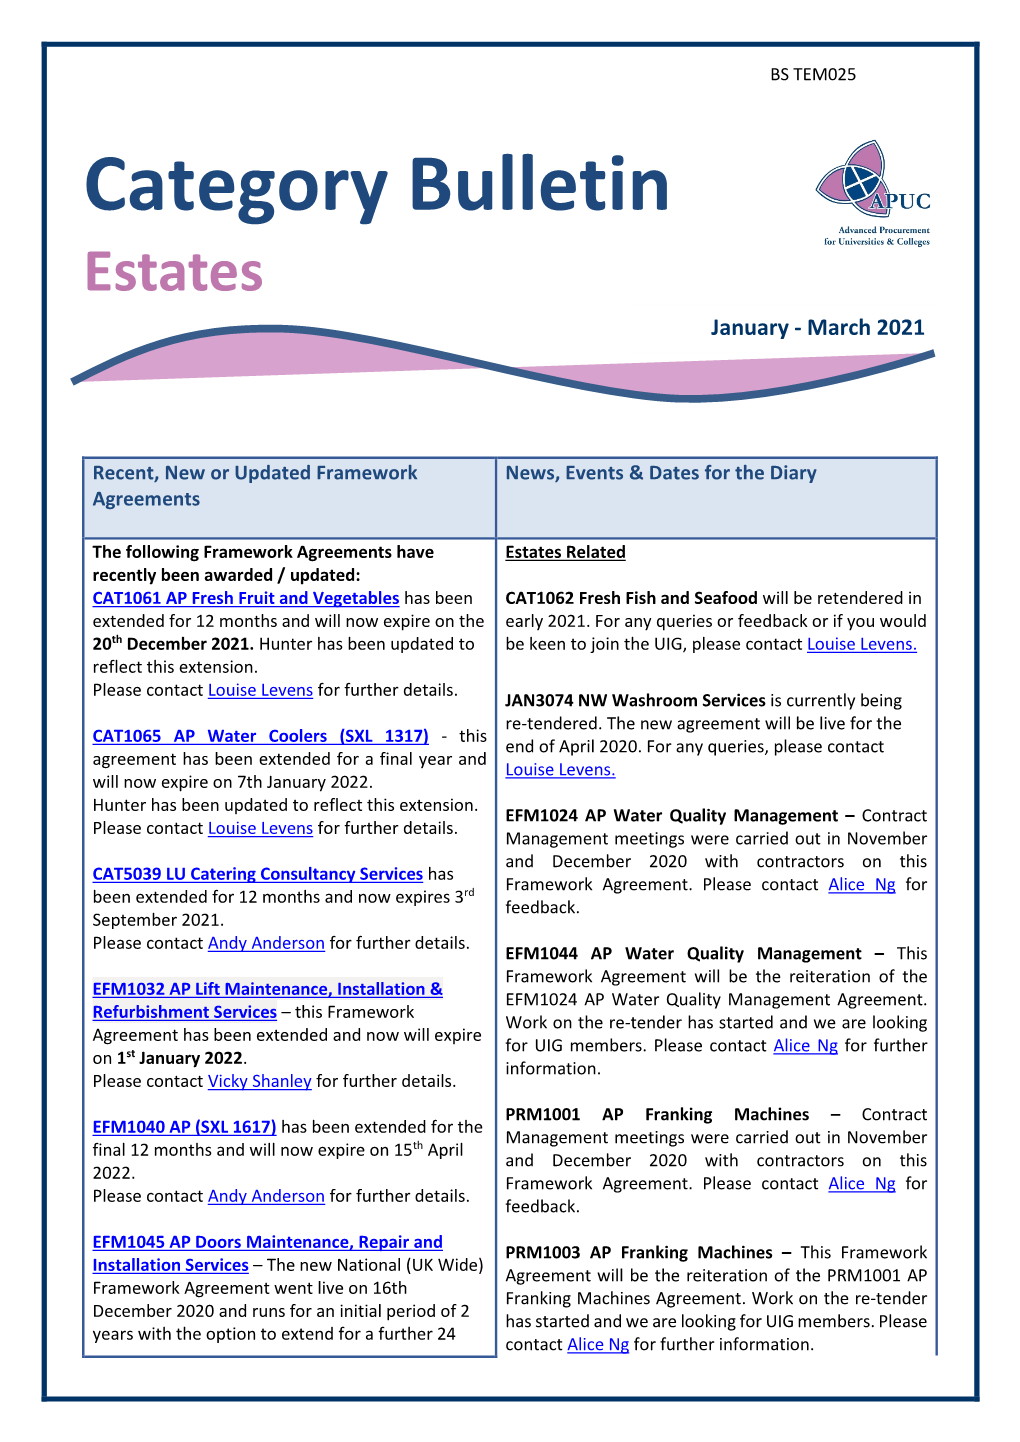 Category Bulletin Estates January - March 2021